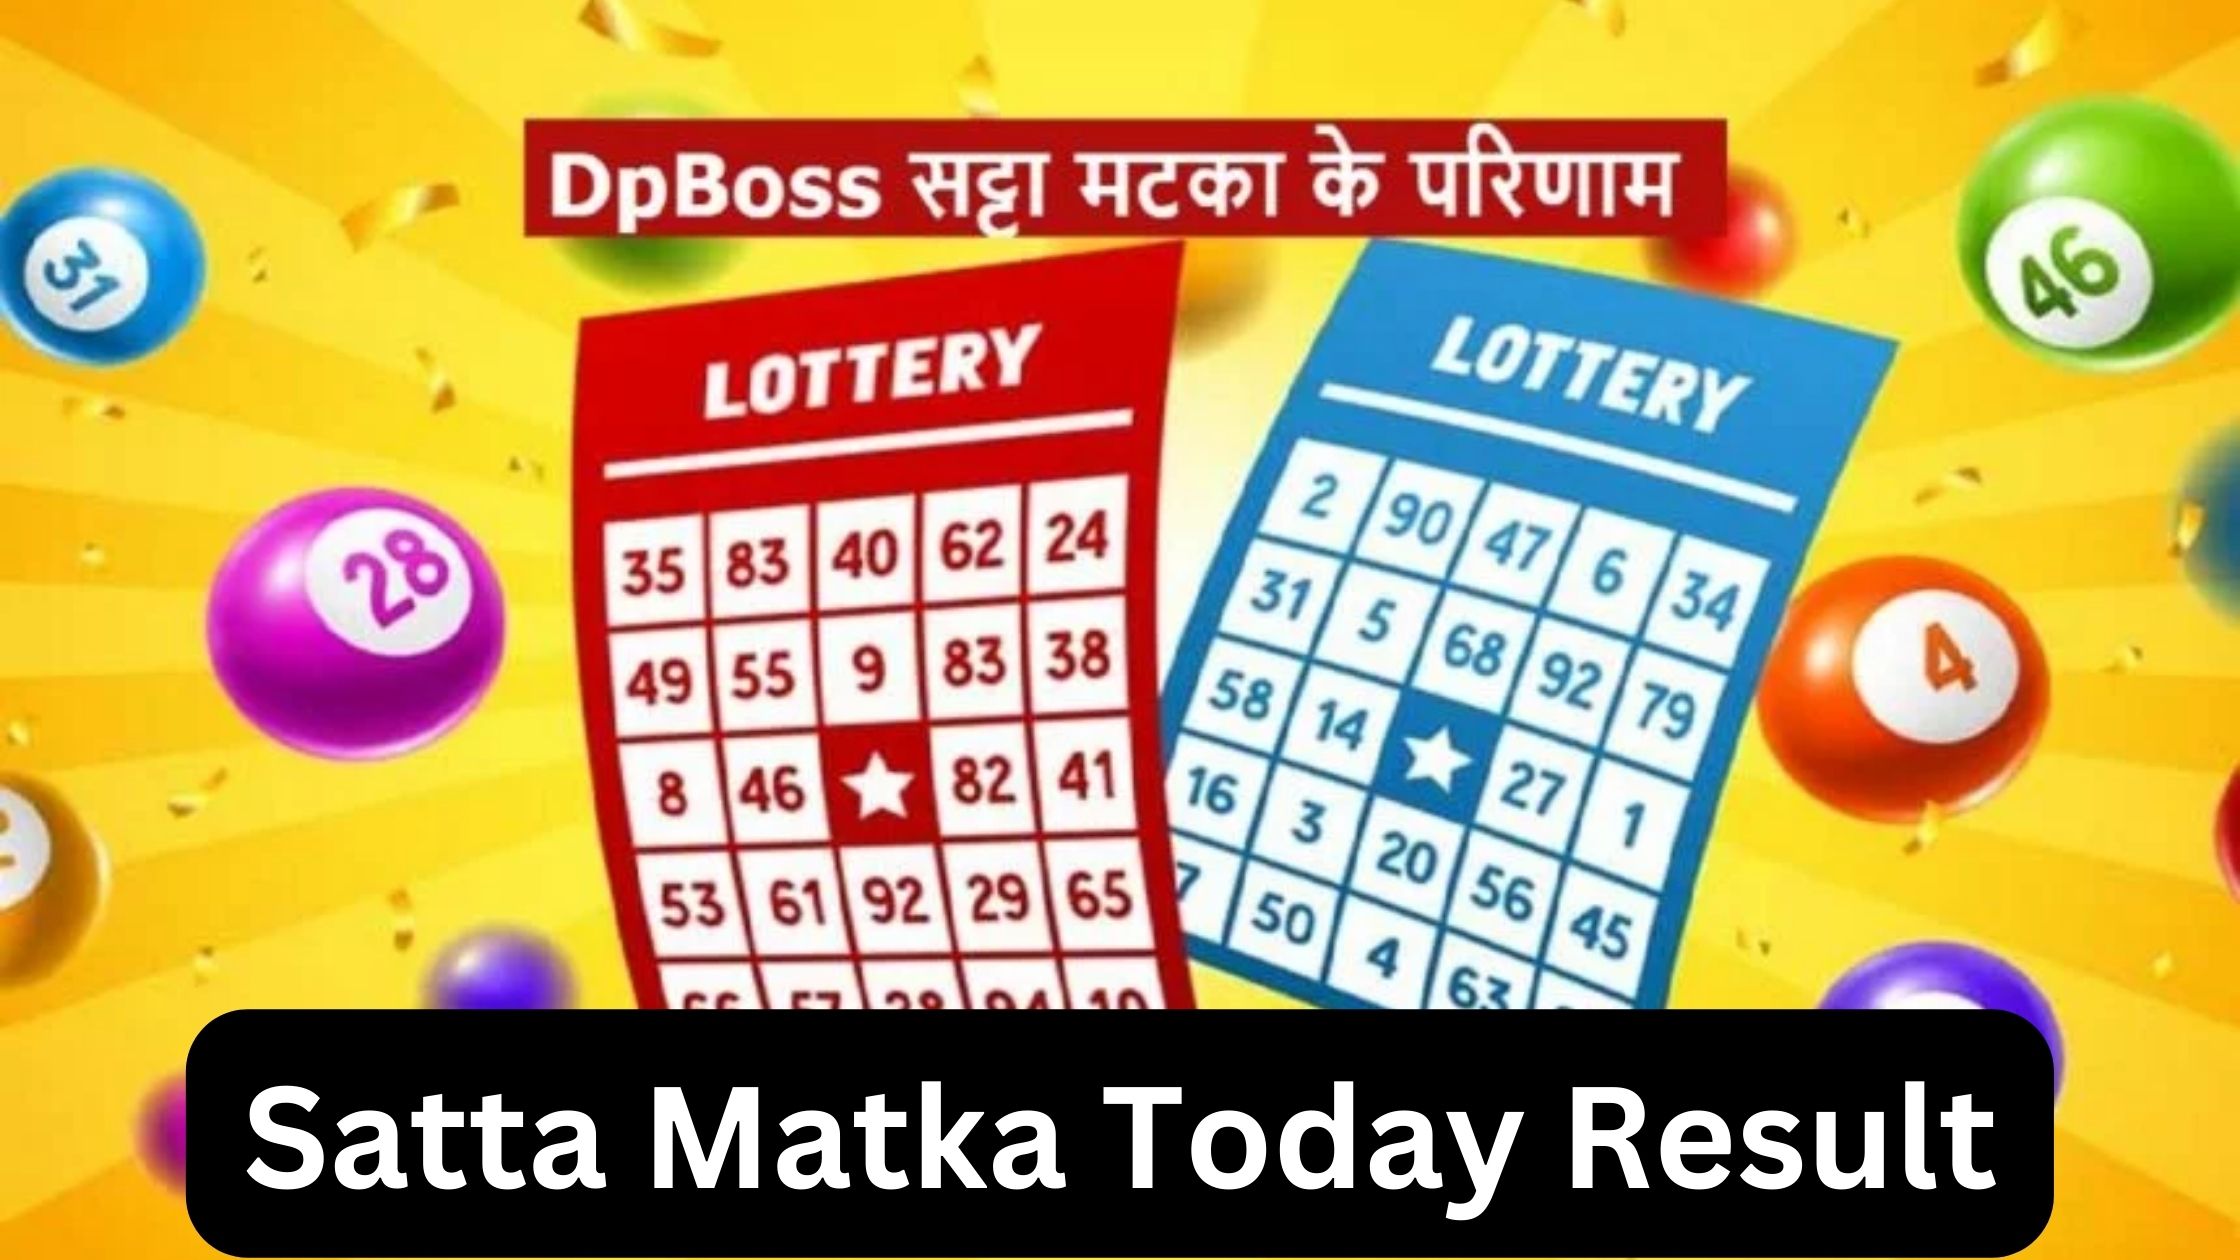 DPBOSS Matka Satta Kalyan Result 09 August: Winning Numbers For Kalyan Satta  Matka, King, Gali, Disawar, Ghaziabad, Faridabad - My Hindi Voice